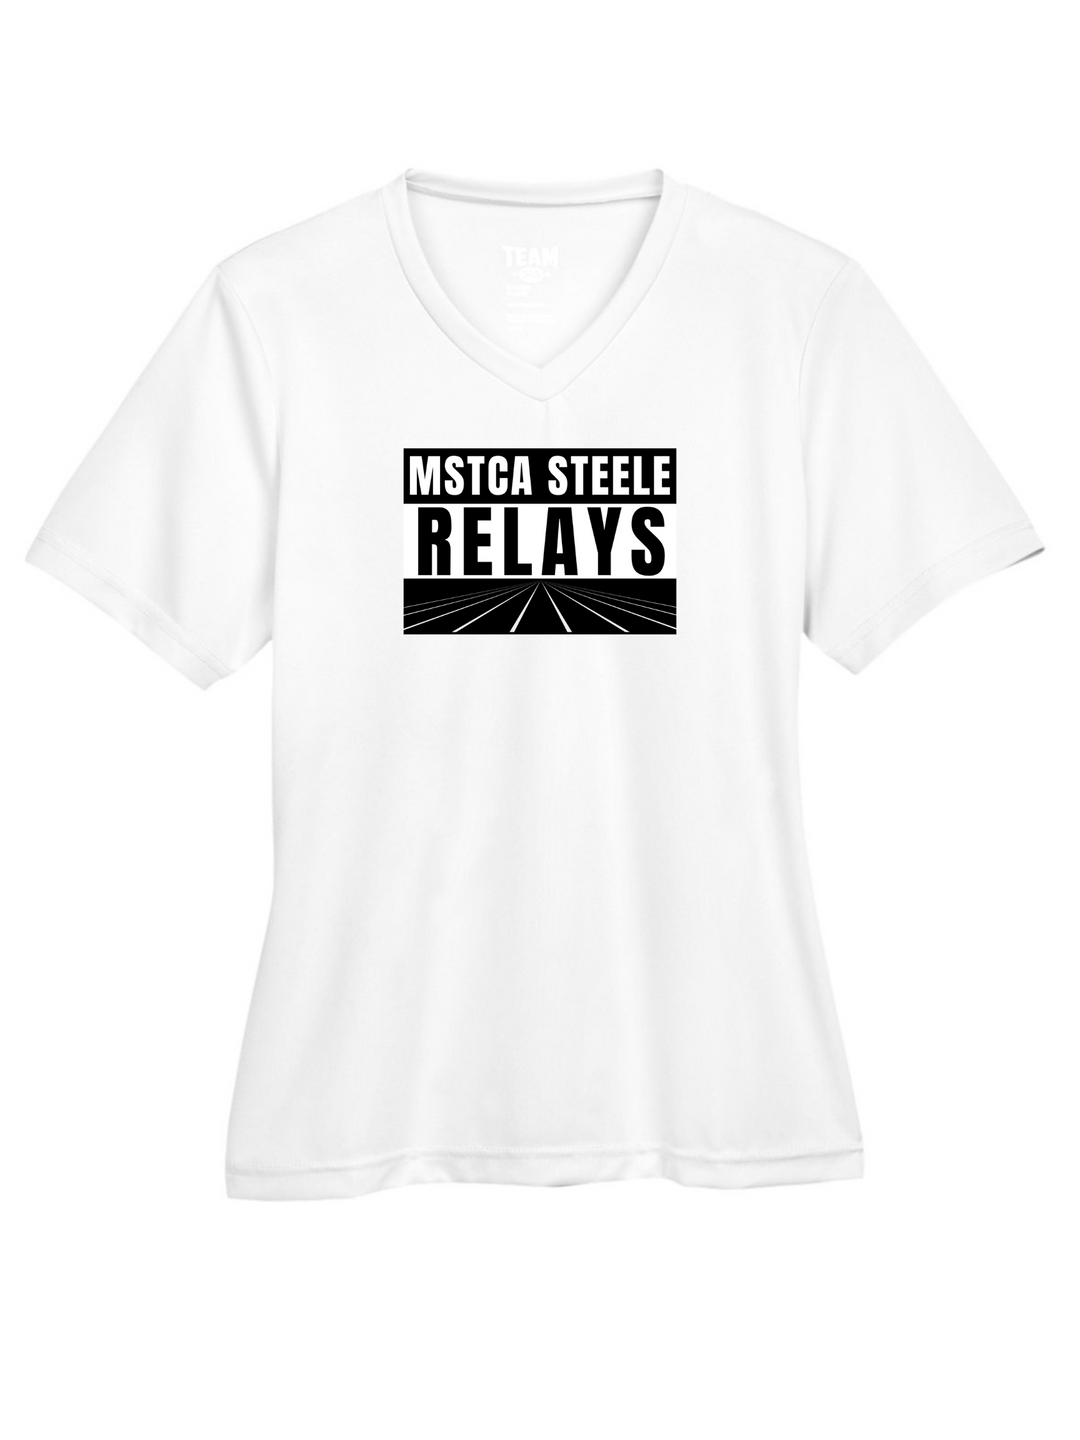 MSTCA Steele Relays - Women's Performance T-Shirt (TT11W)